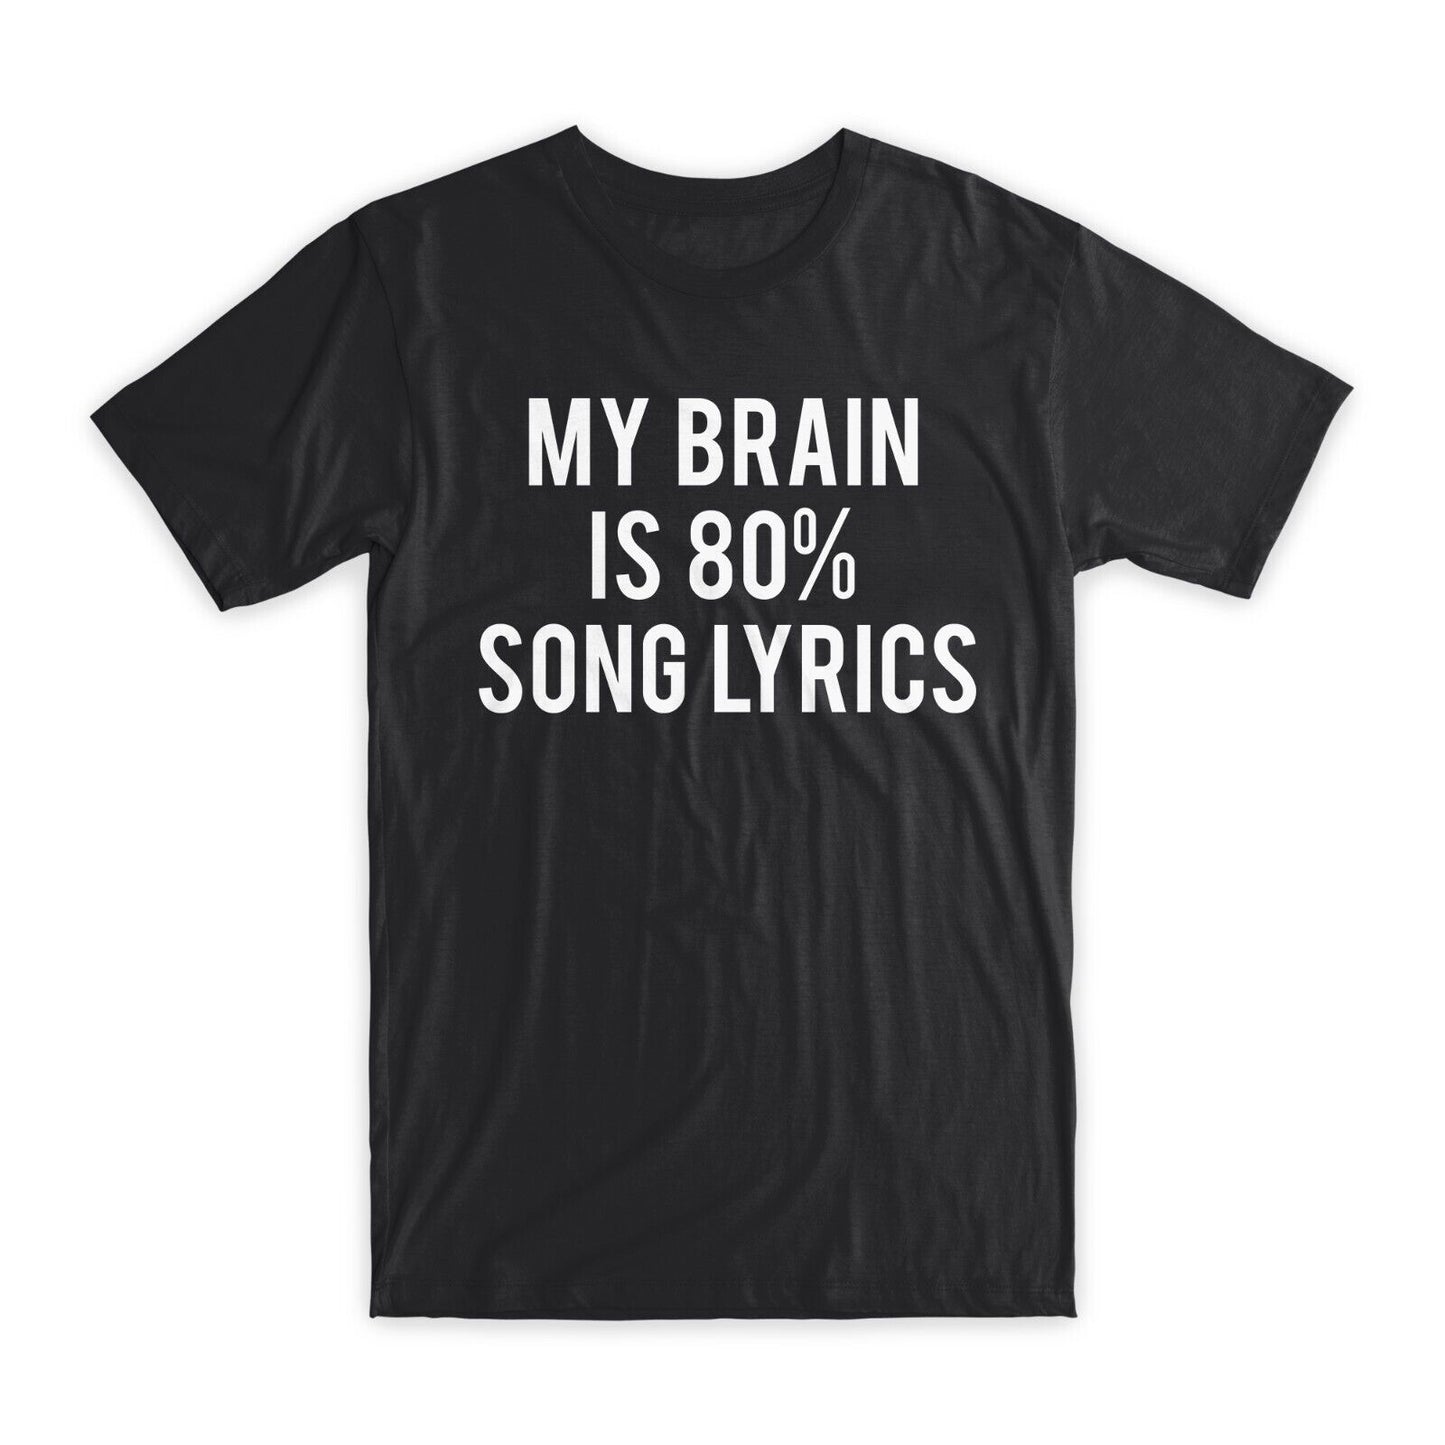 My Brain is 80% Song Lyrics T-Shirt Premium Cotton Crew Neck Funny Tees Gift NEW